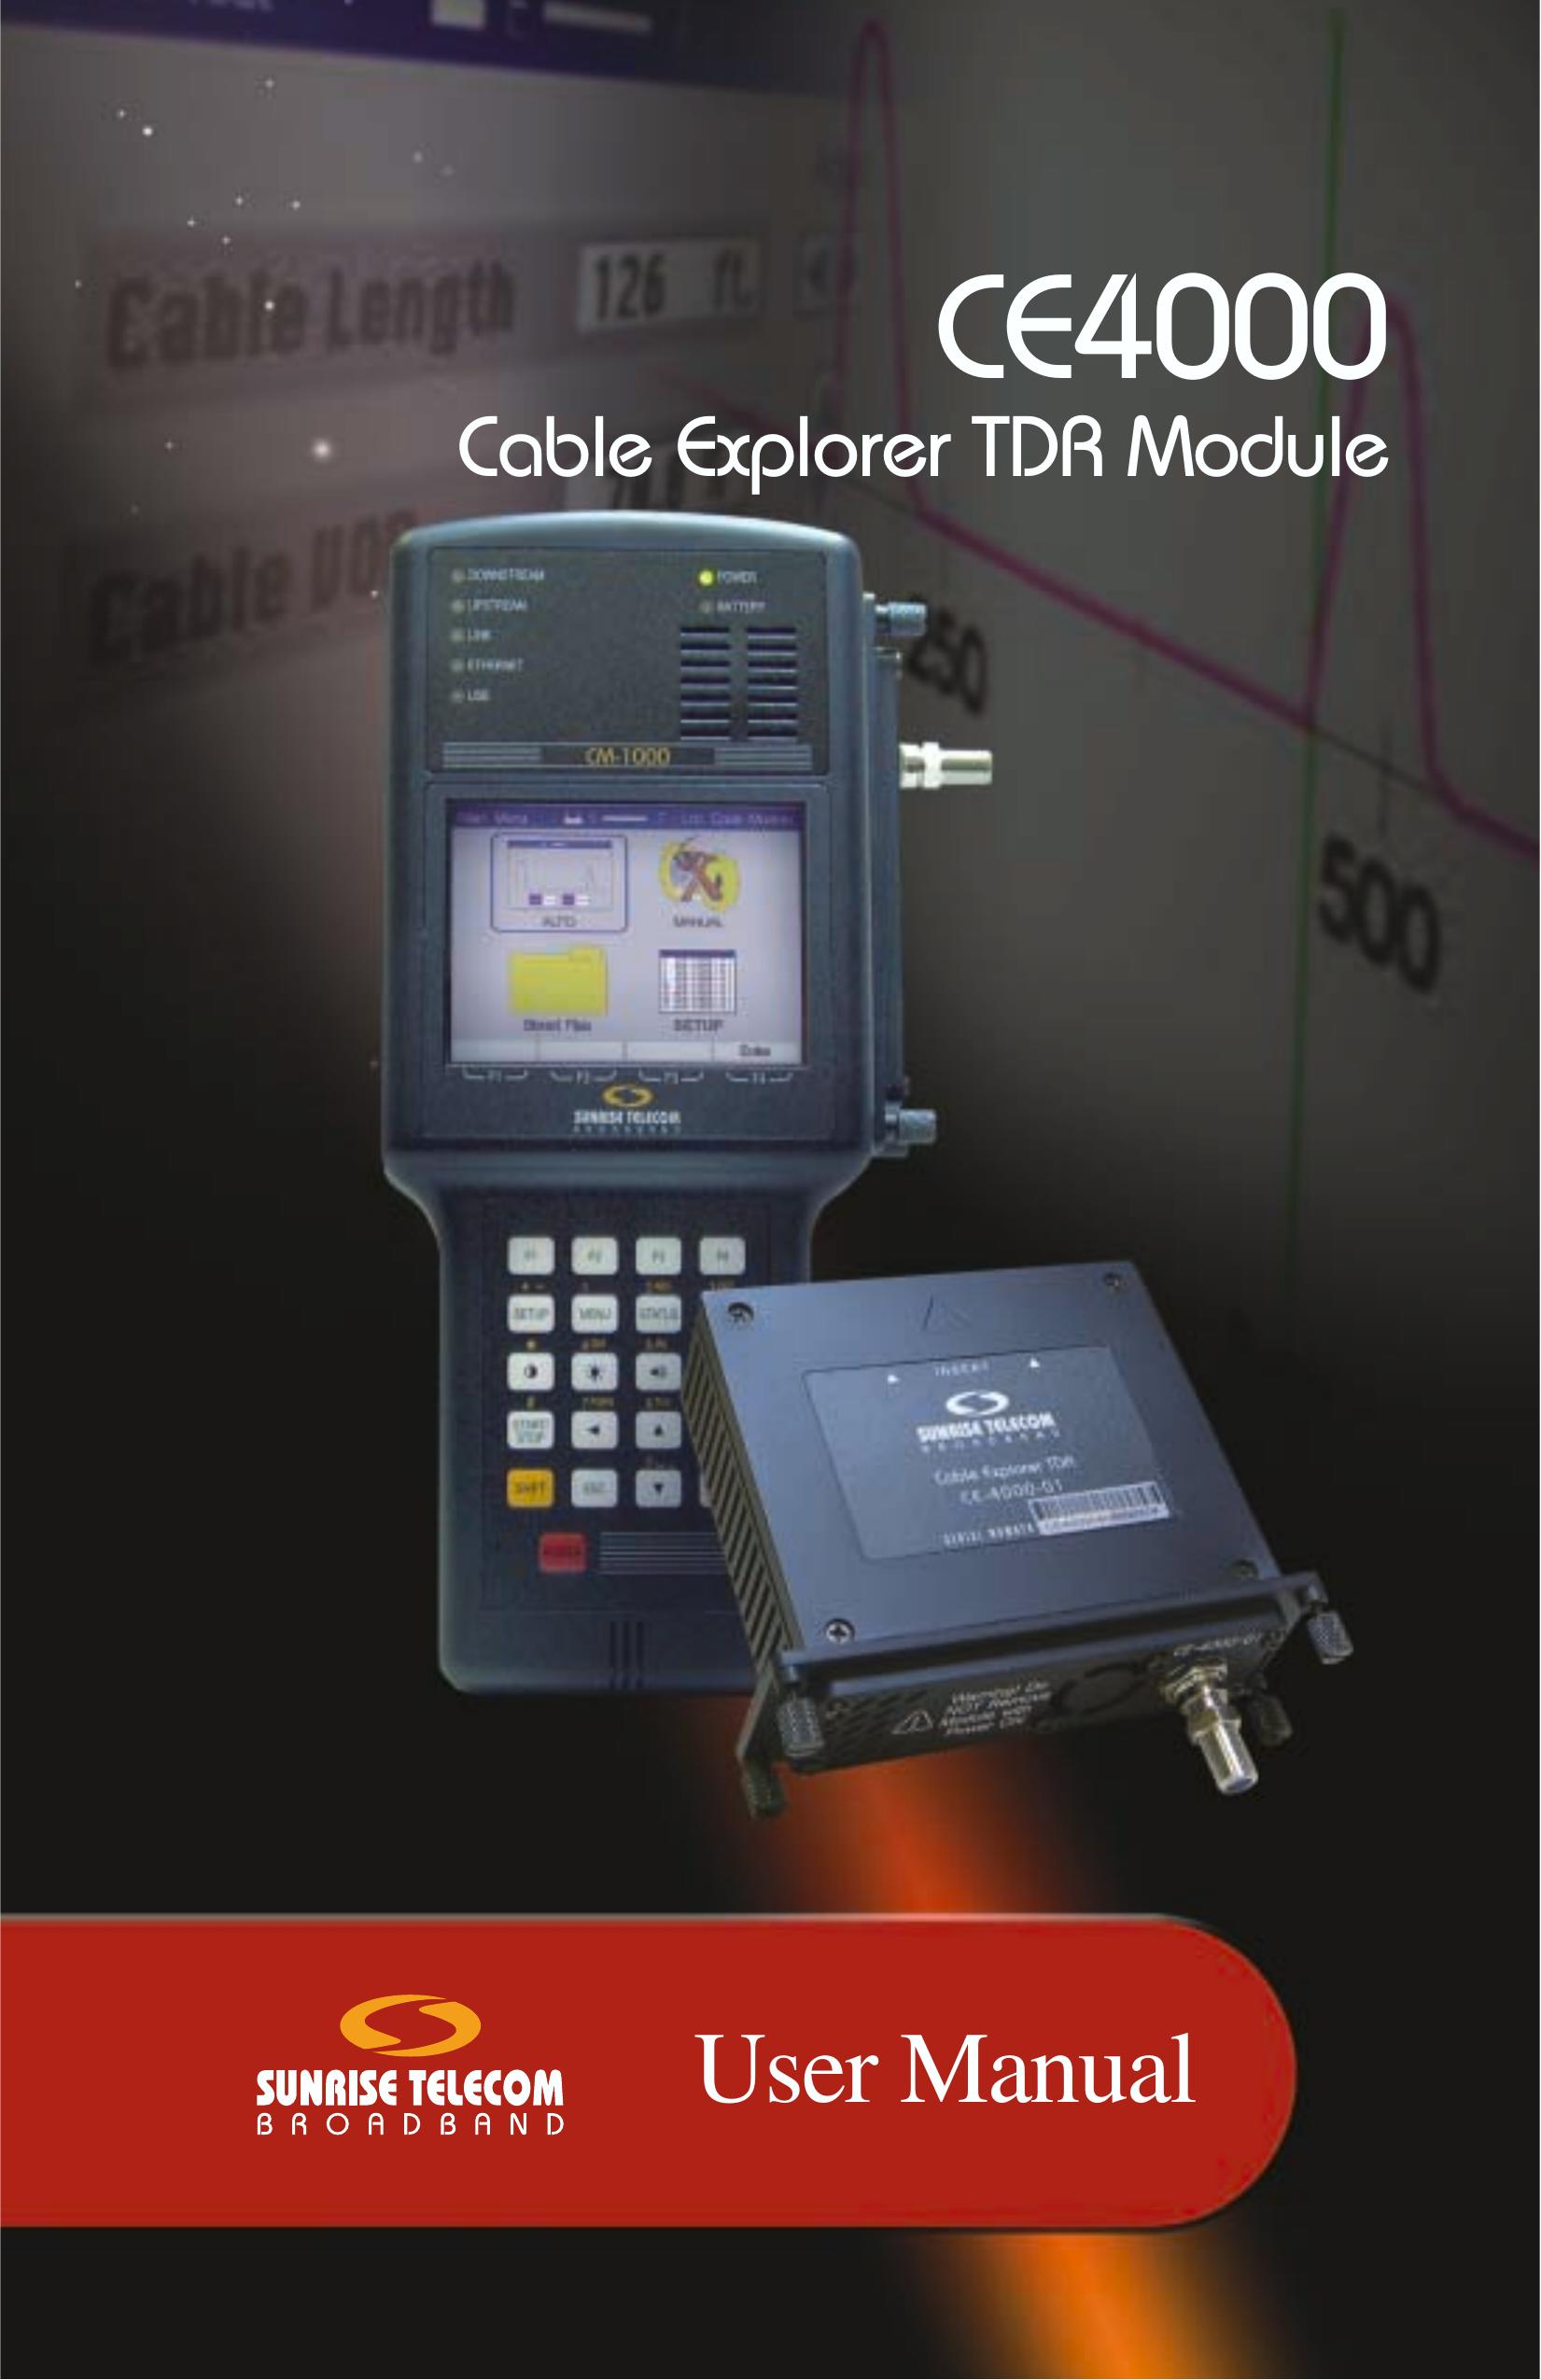 Sunrise Global Cable Explorer TDR Module Outdoor Kitchen Island User Manual